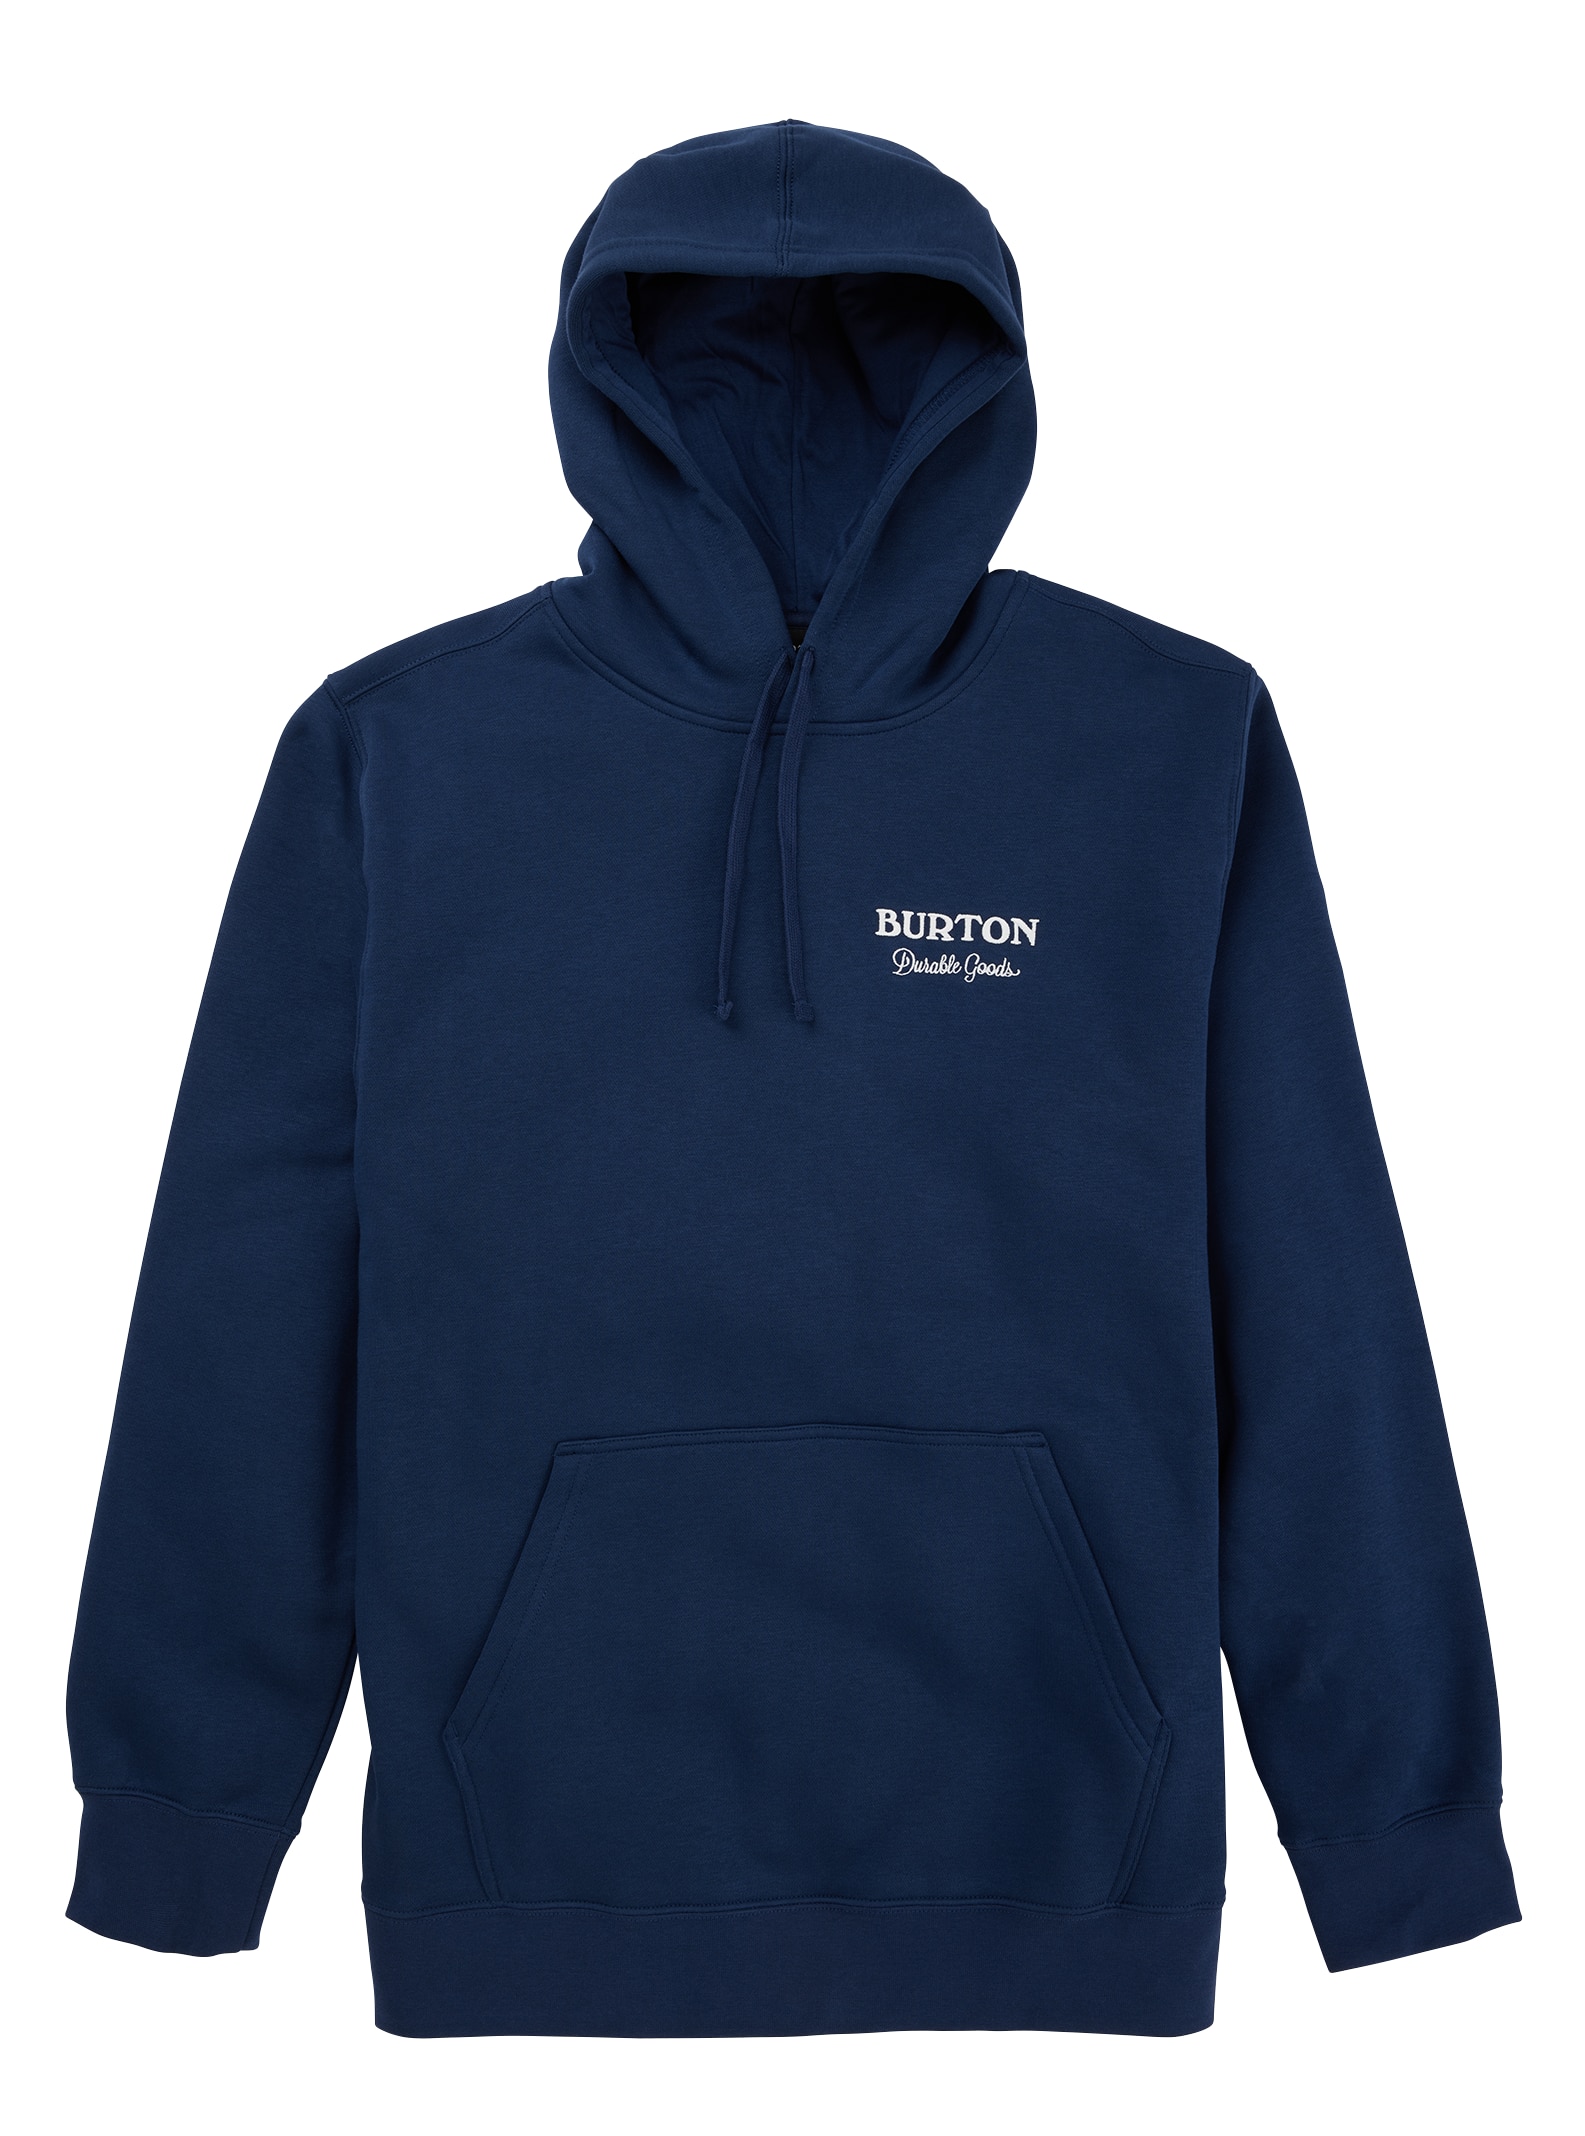 Durable Goods Pullover Hoodie Sweatshirt | Burton.com Winter 2023 GB